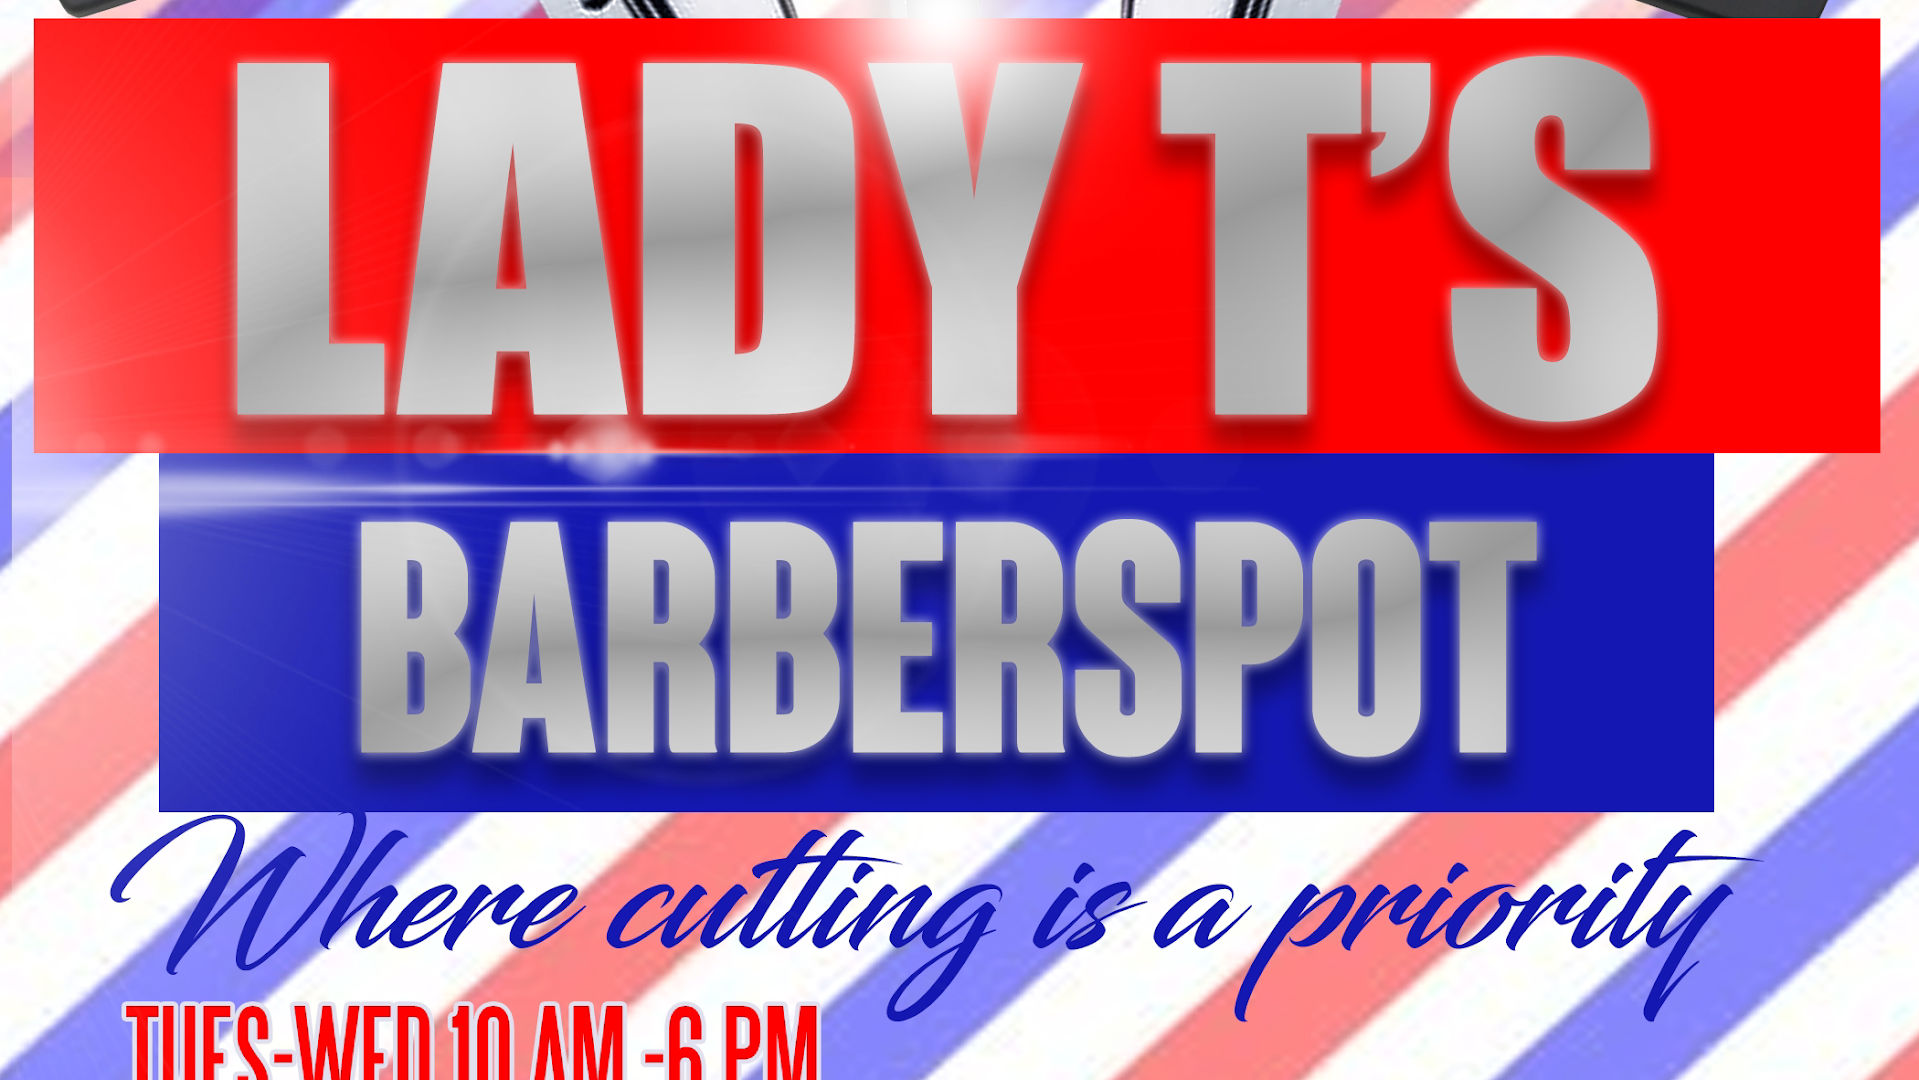 Lady T's Barberspot